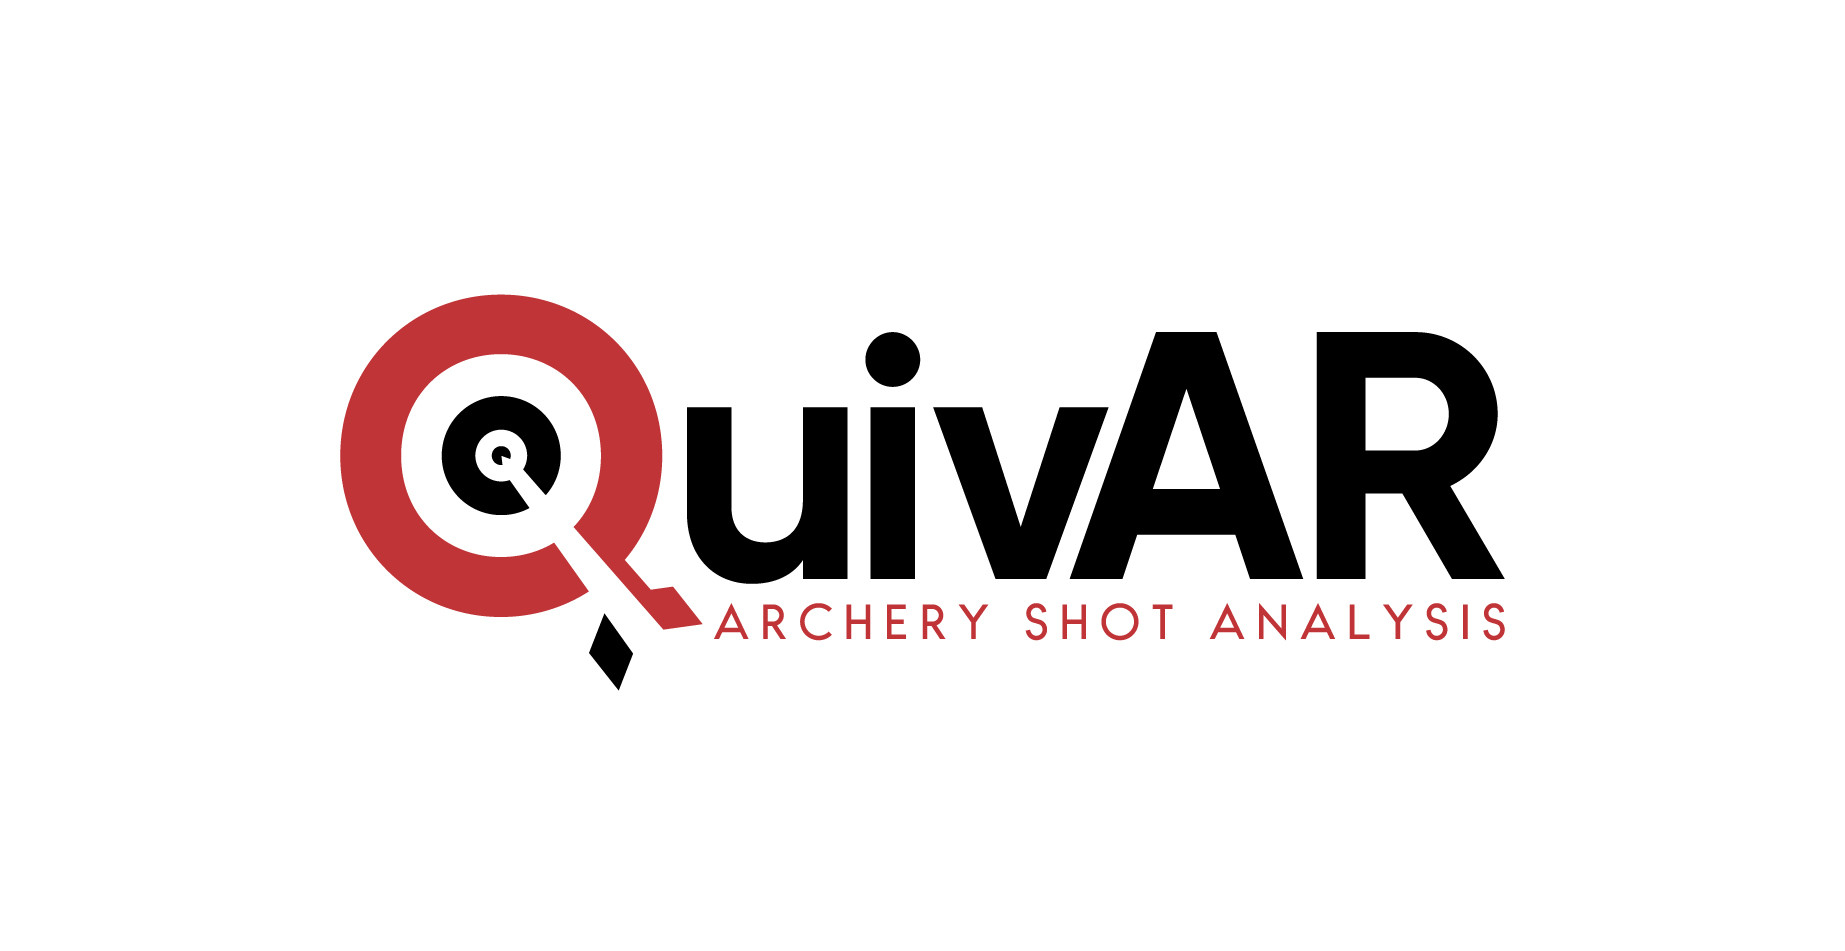 www.quivar.app